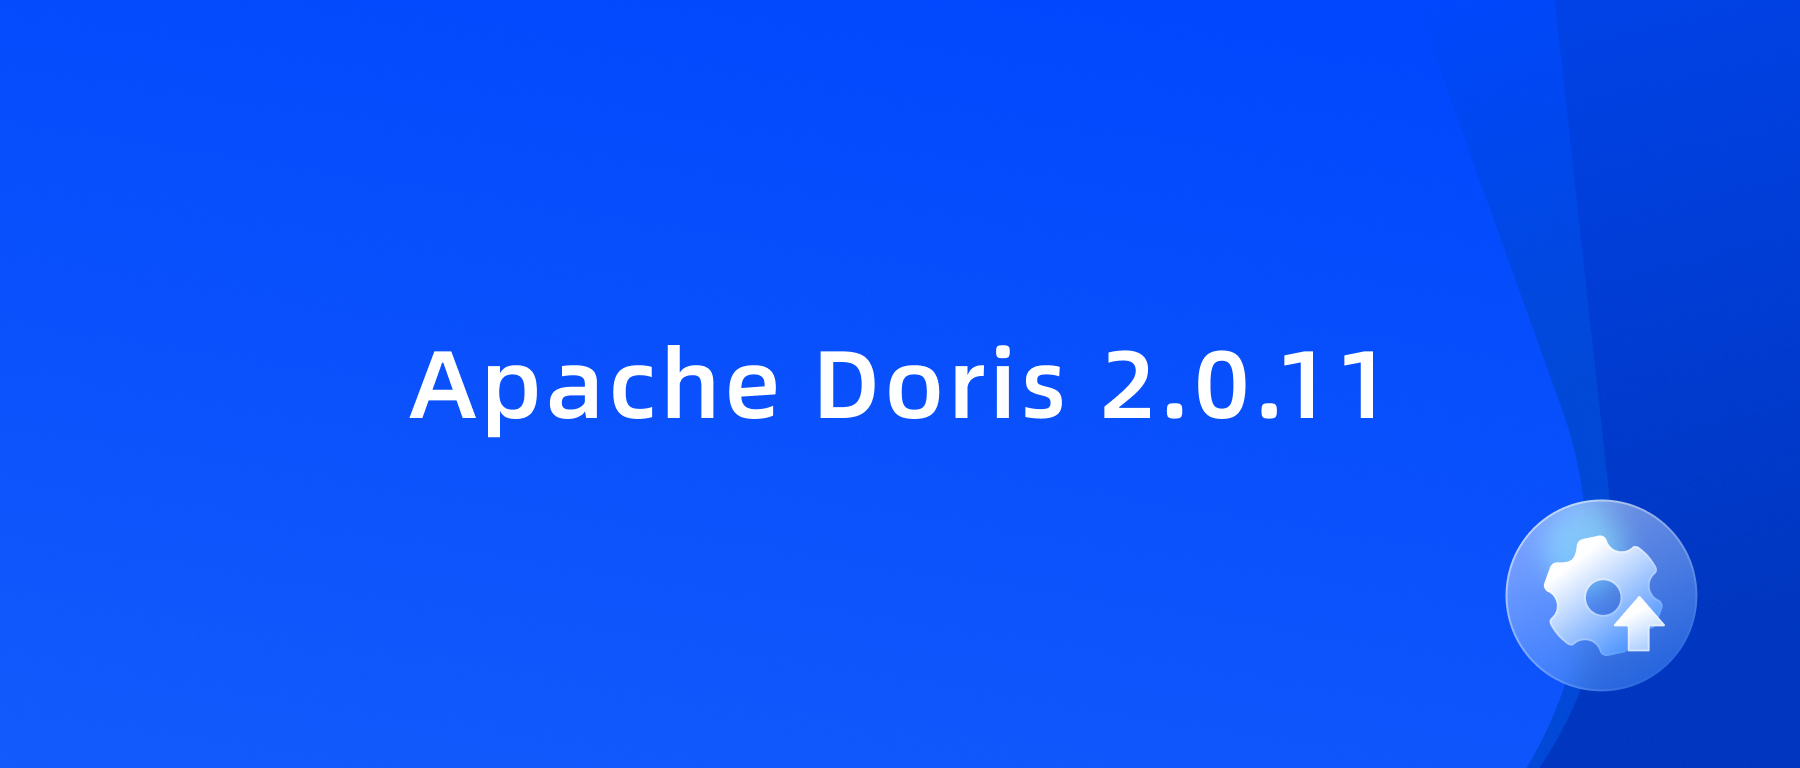 Apache Doris version 2.0.11 just released